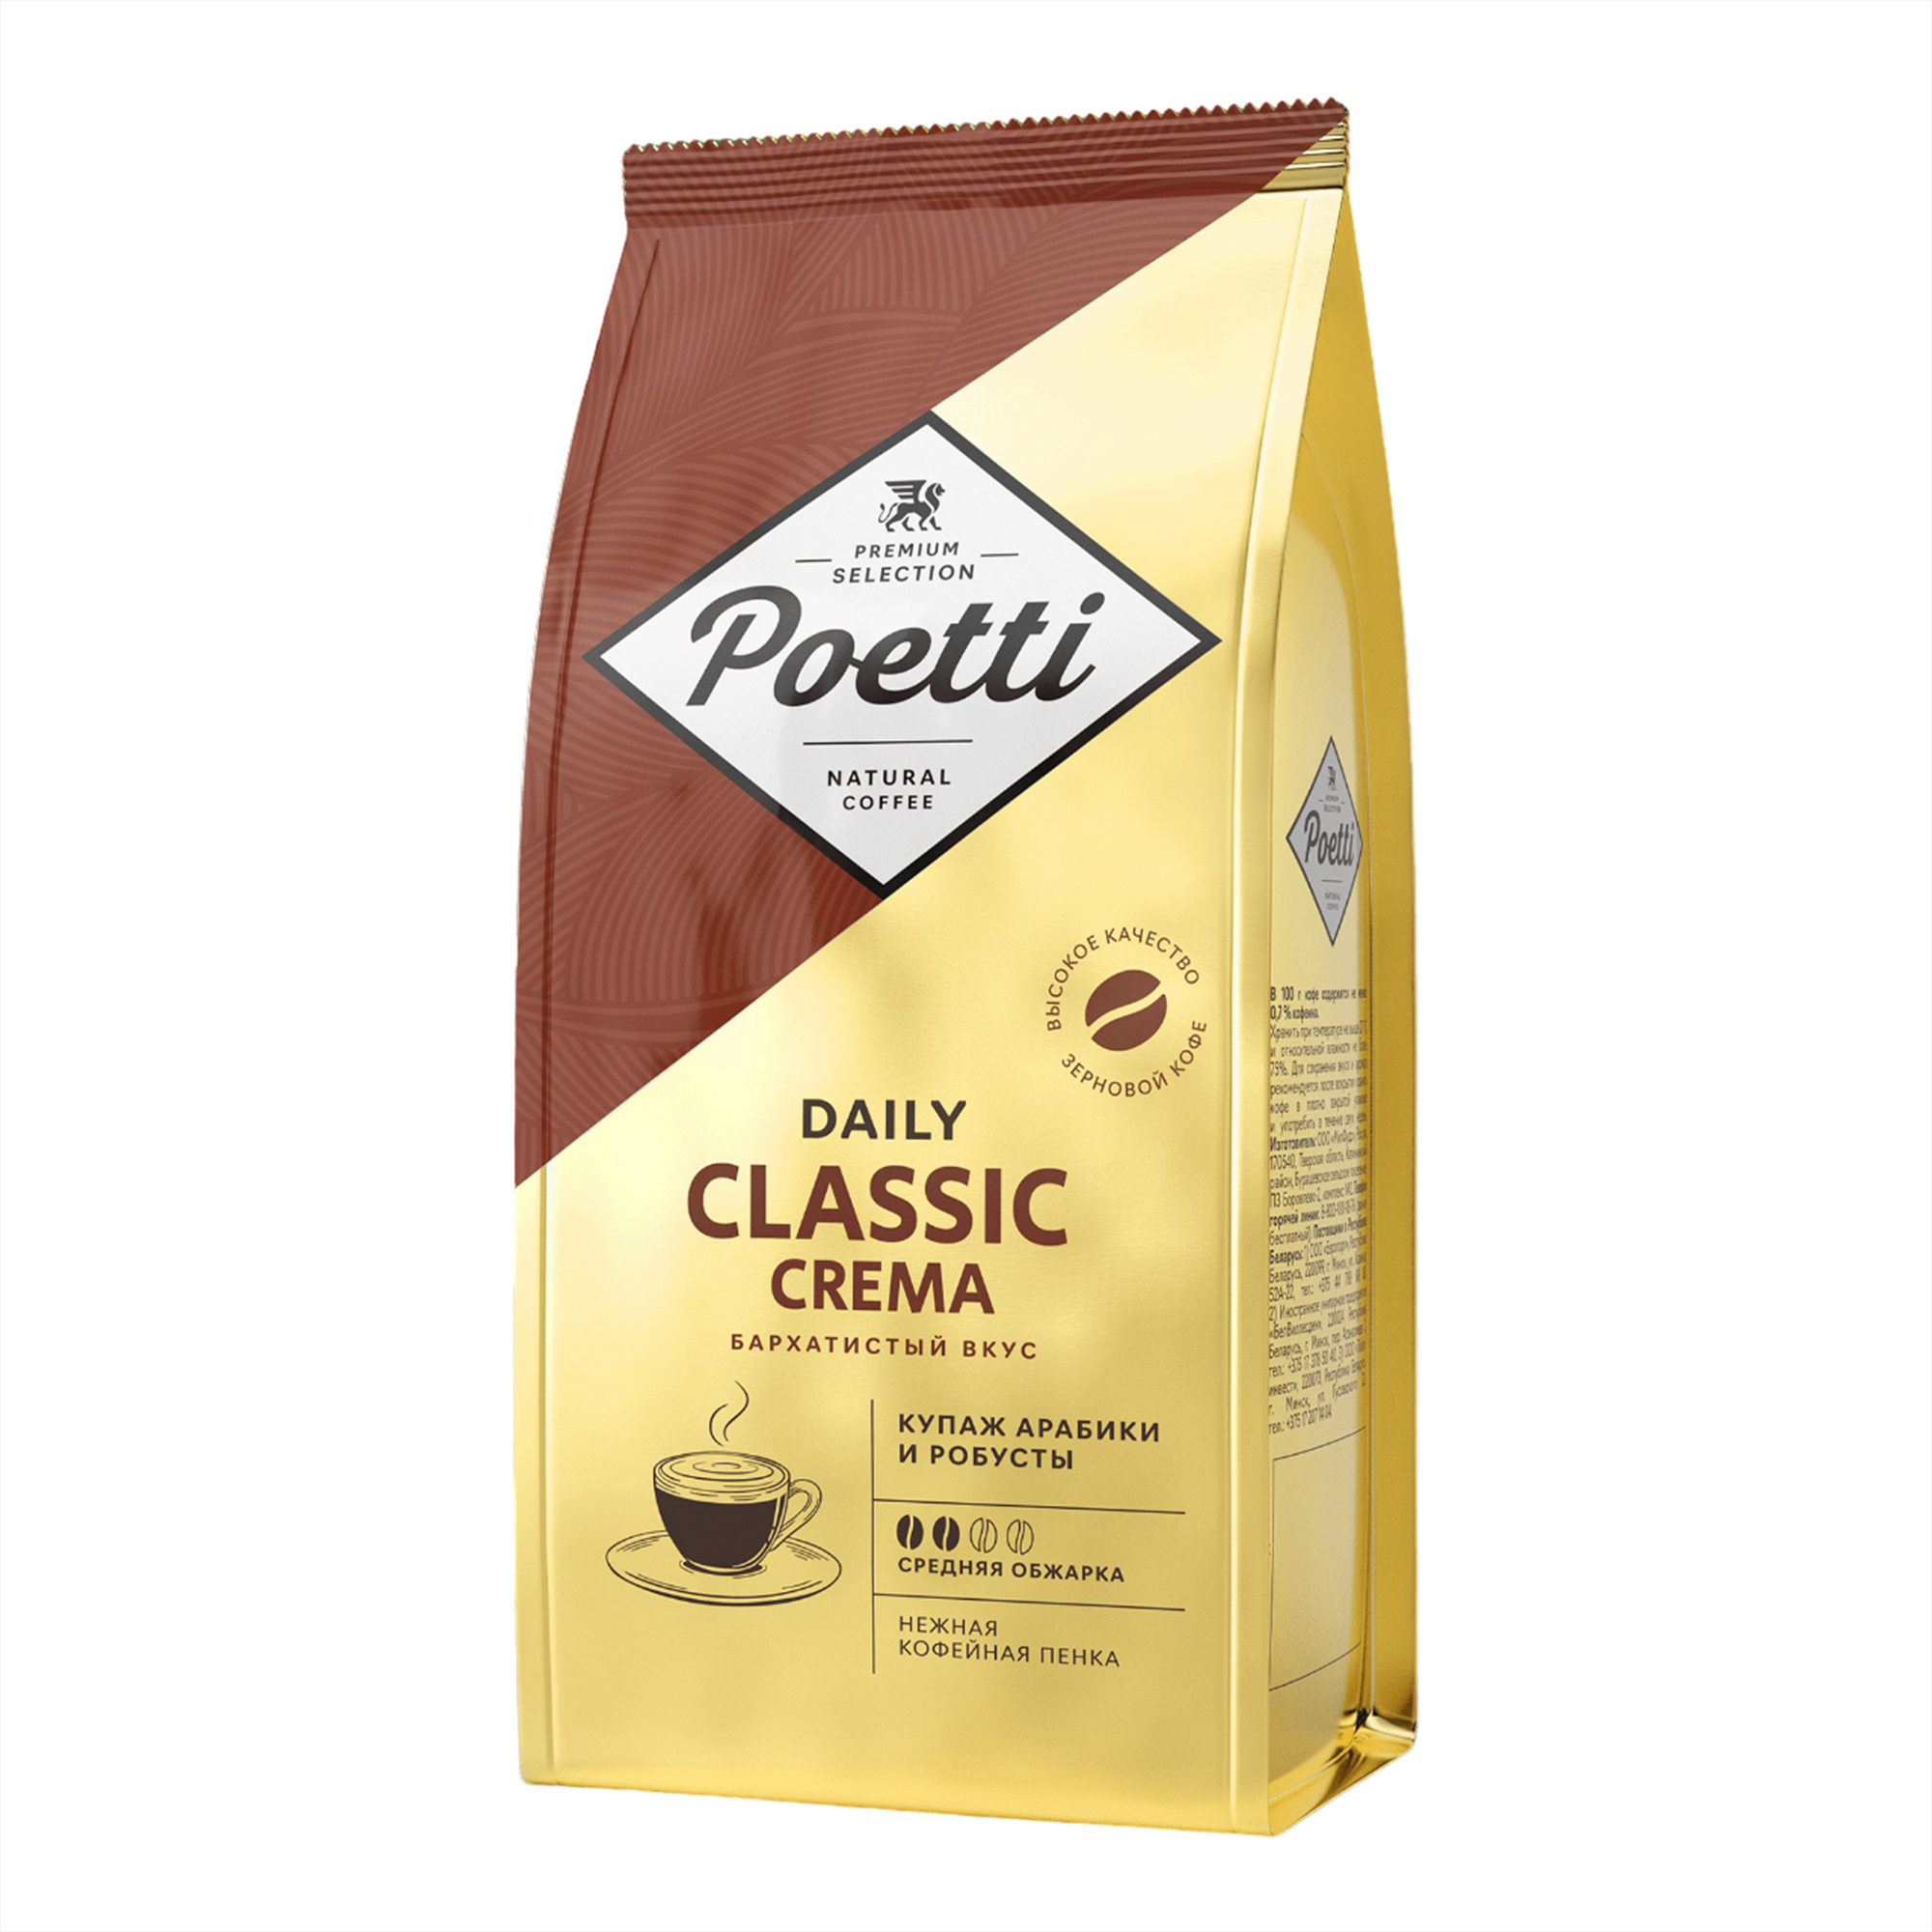 Кофе Poetti Daily Classic Crema в зернах 250 г - купить в ShopKofe, цена на Мегамаркет